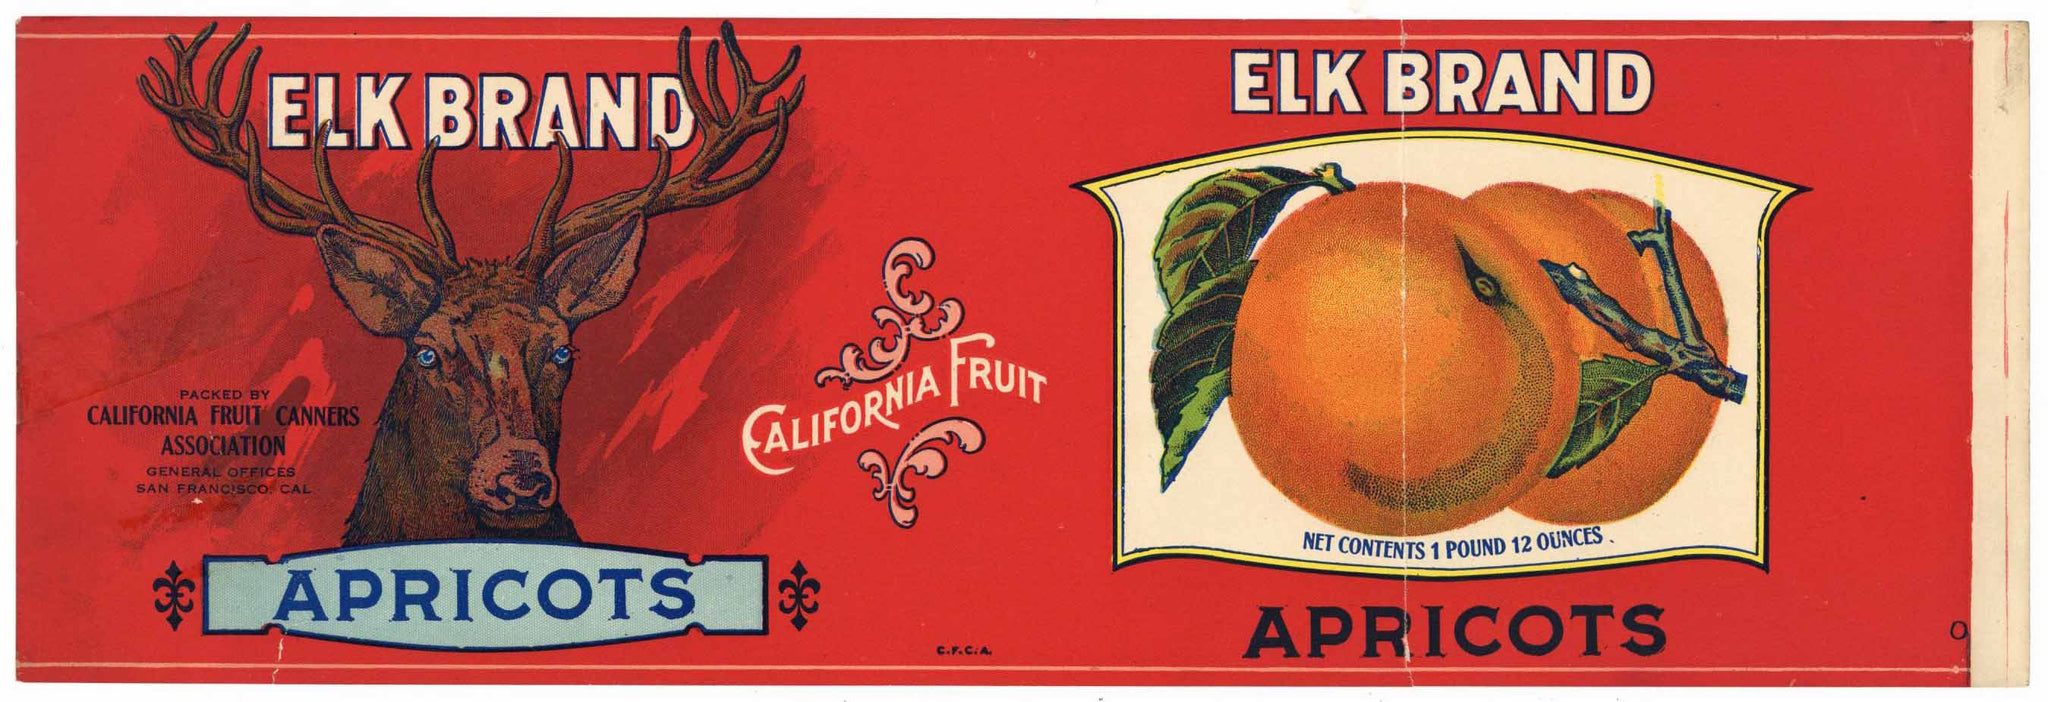 Elk Brand Vintage California Apricot Can Label